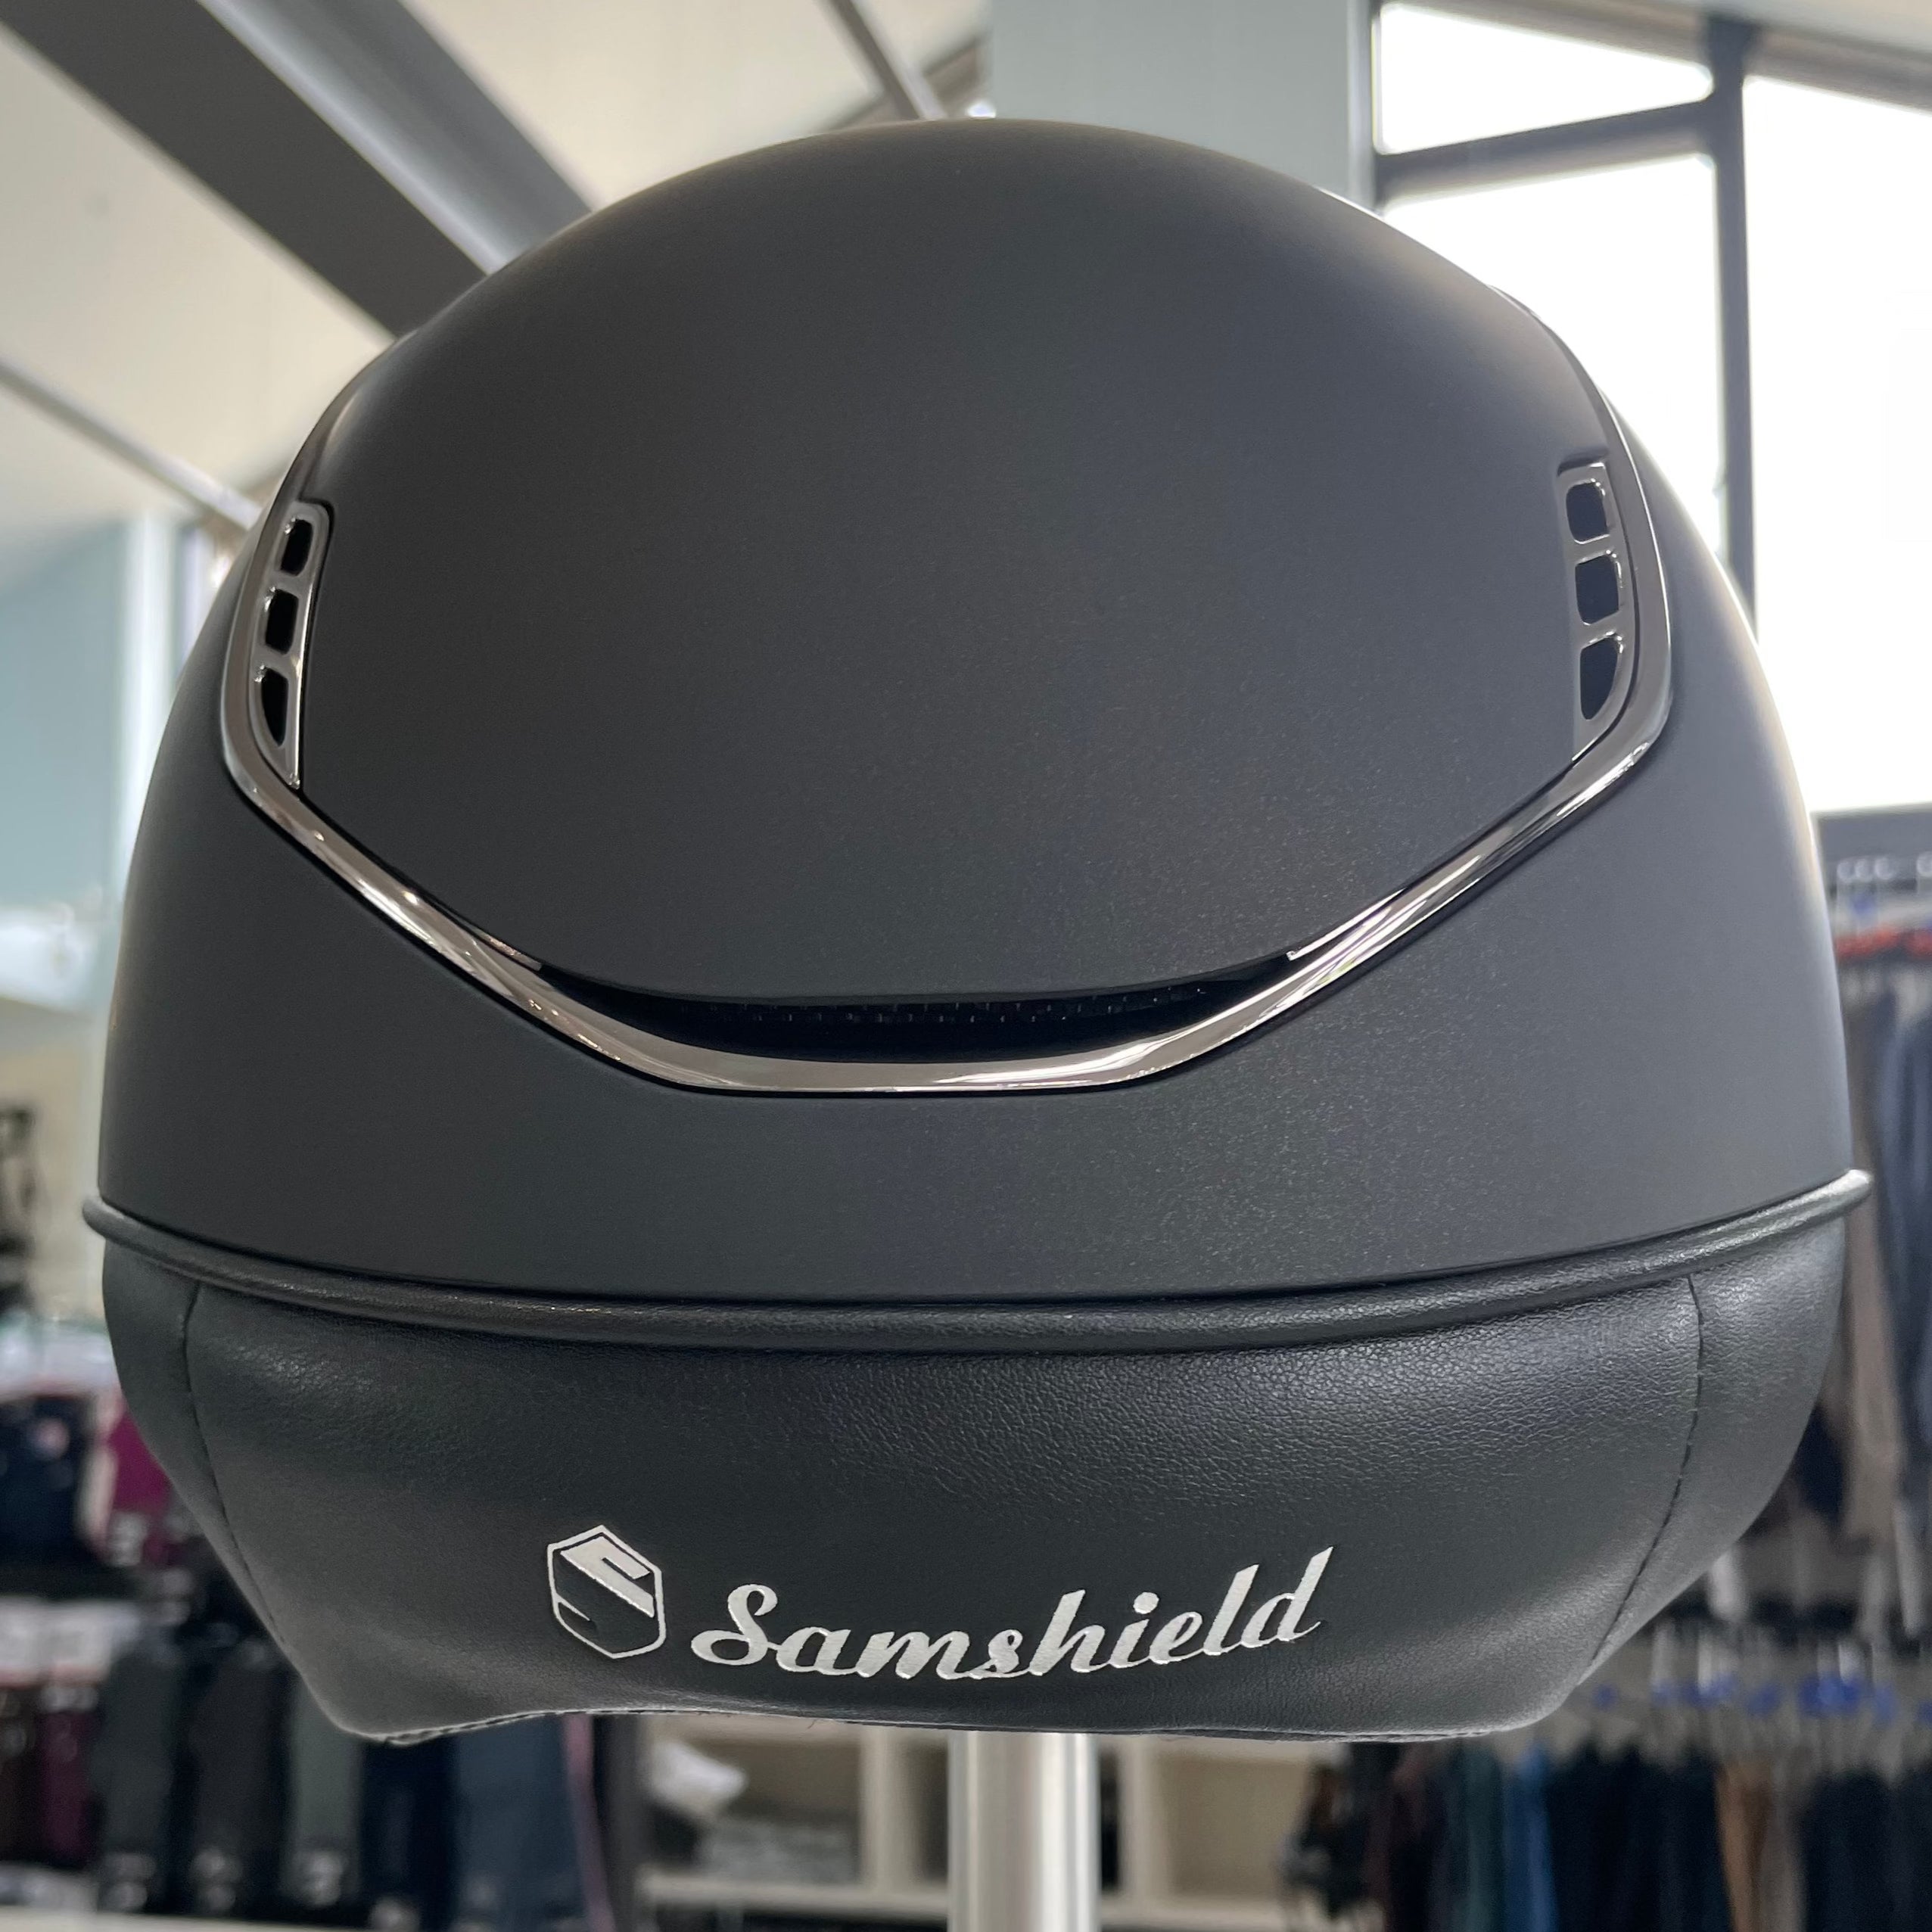 Samshield MissShield 2.0 Black, five front swarovski black crystal, black chrome trim and badge M- in stock and ready to ship!